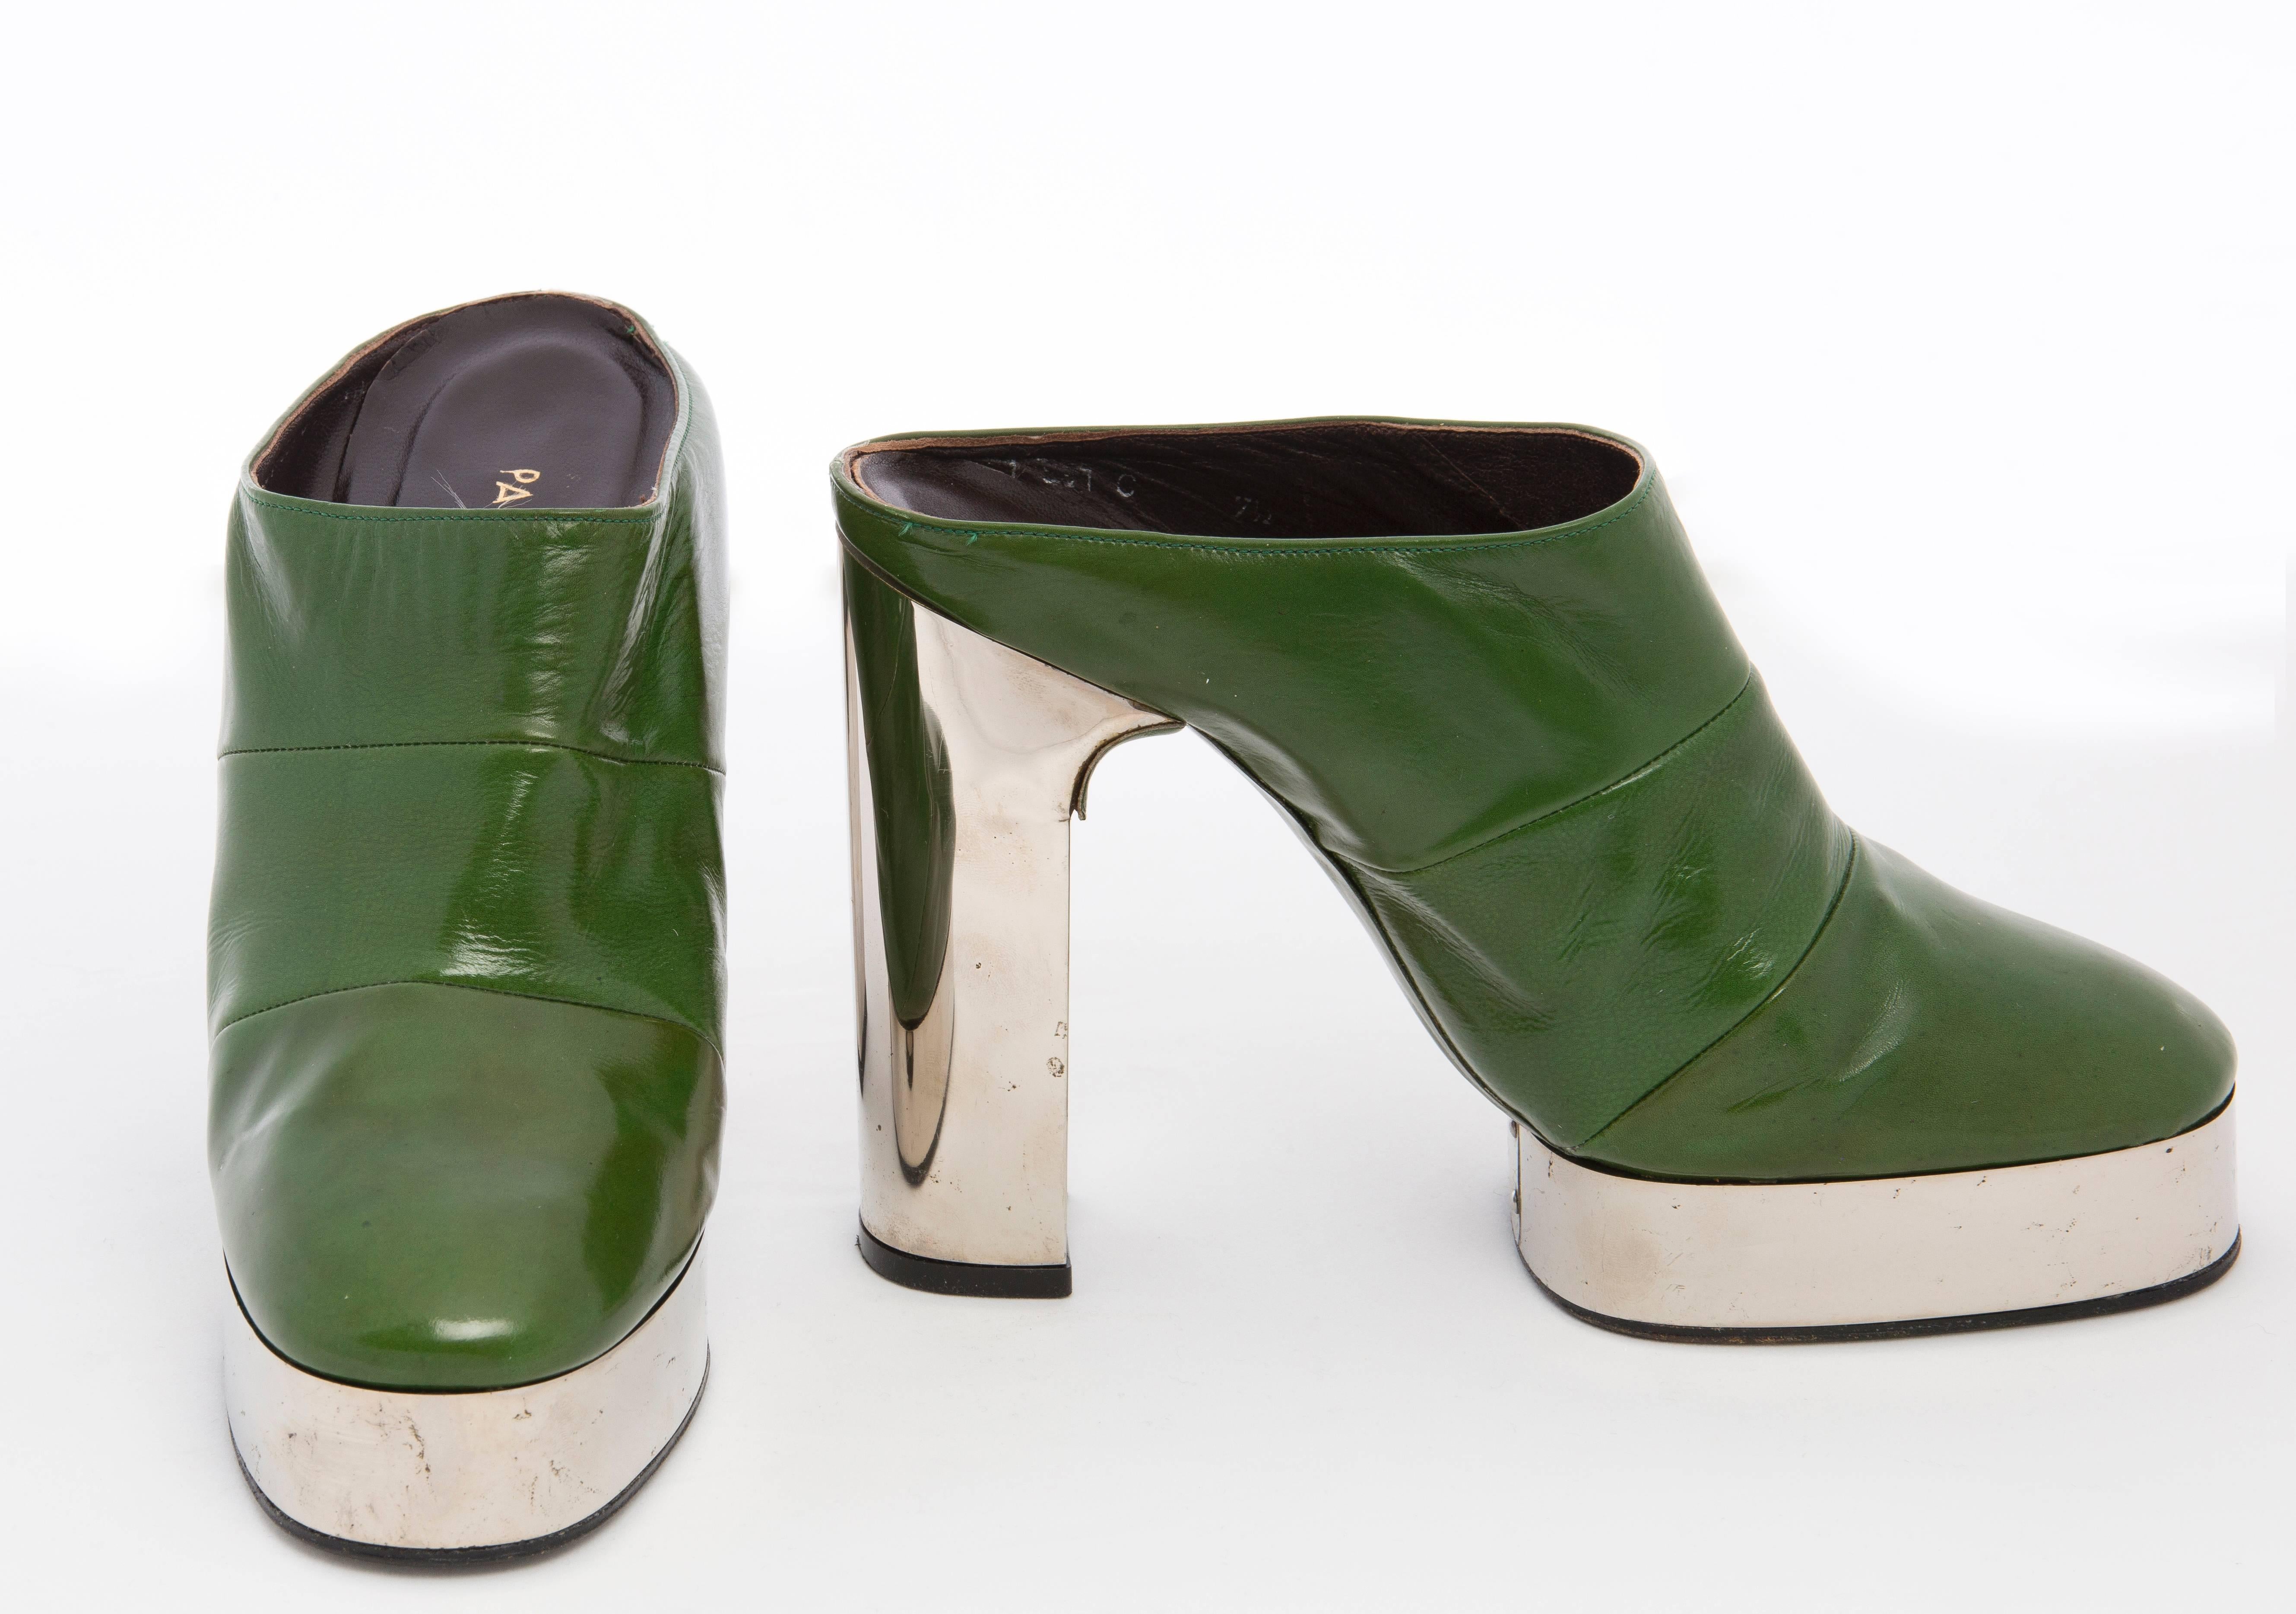 pancaldi shoes history